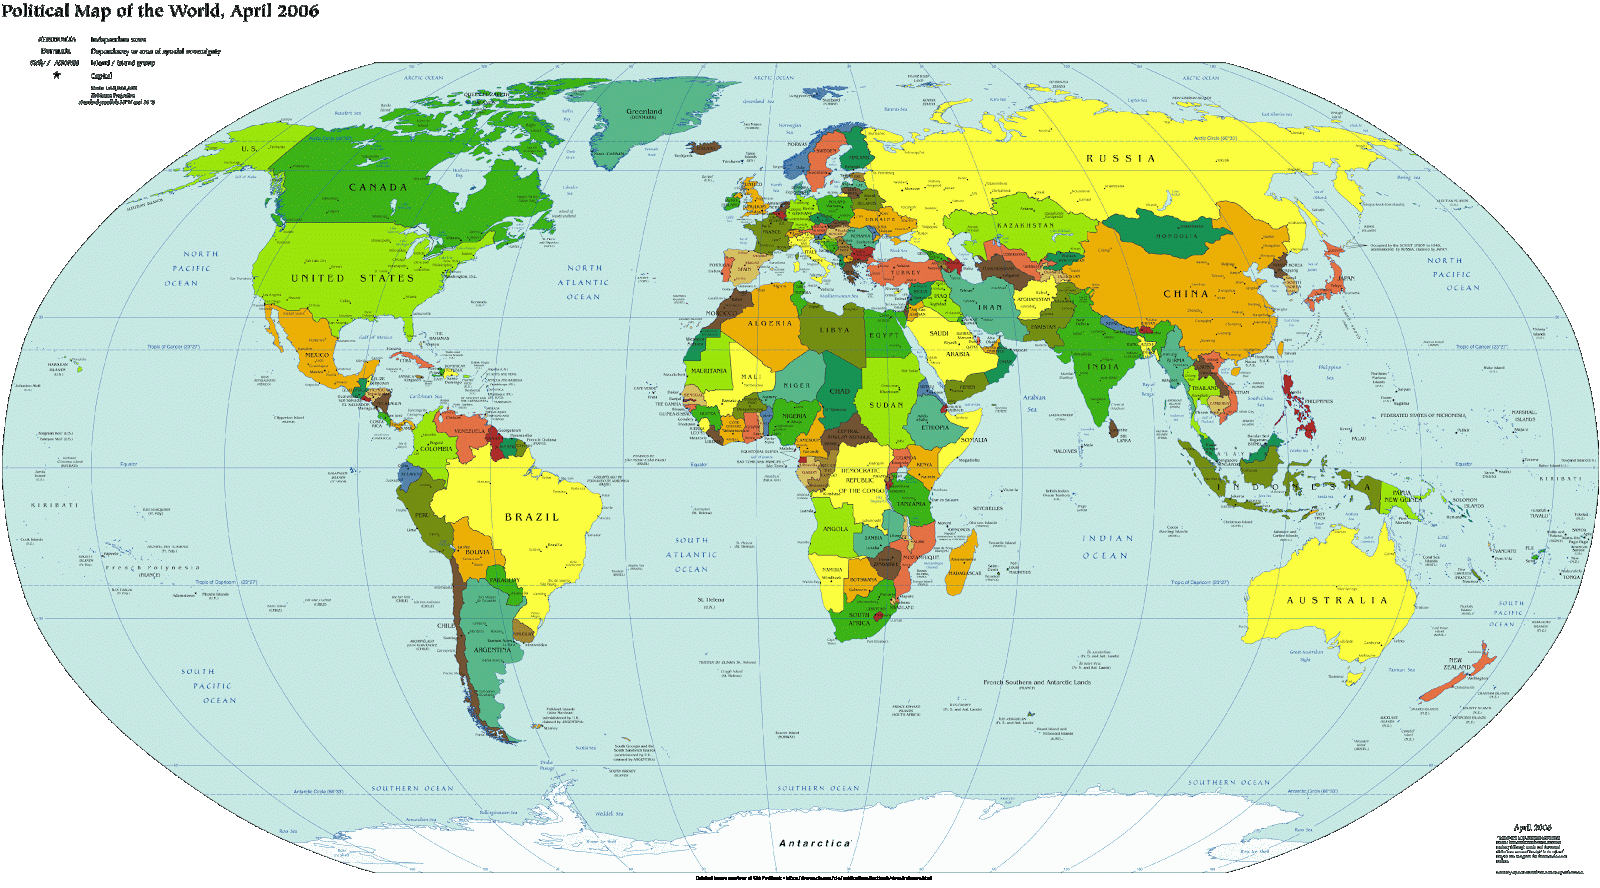 http://3.bp.blogspot.com/_ITA4049YkB8/TJ058UDcUlI/AAAAAAAABQU/RWFQ1E_FgGQ/s1600/wallpaper-world-map-2006-large.gif